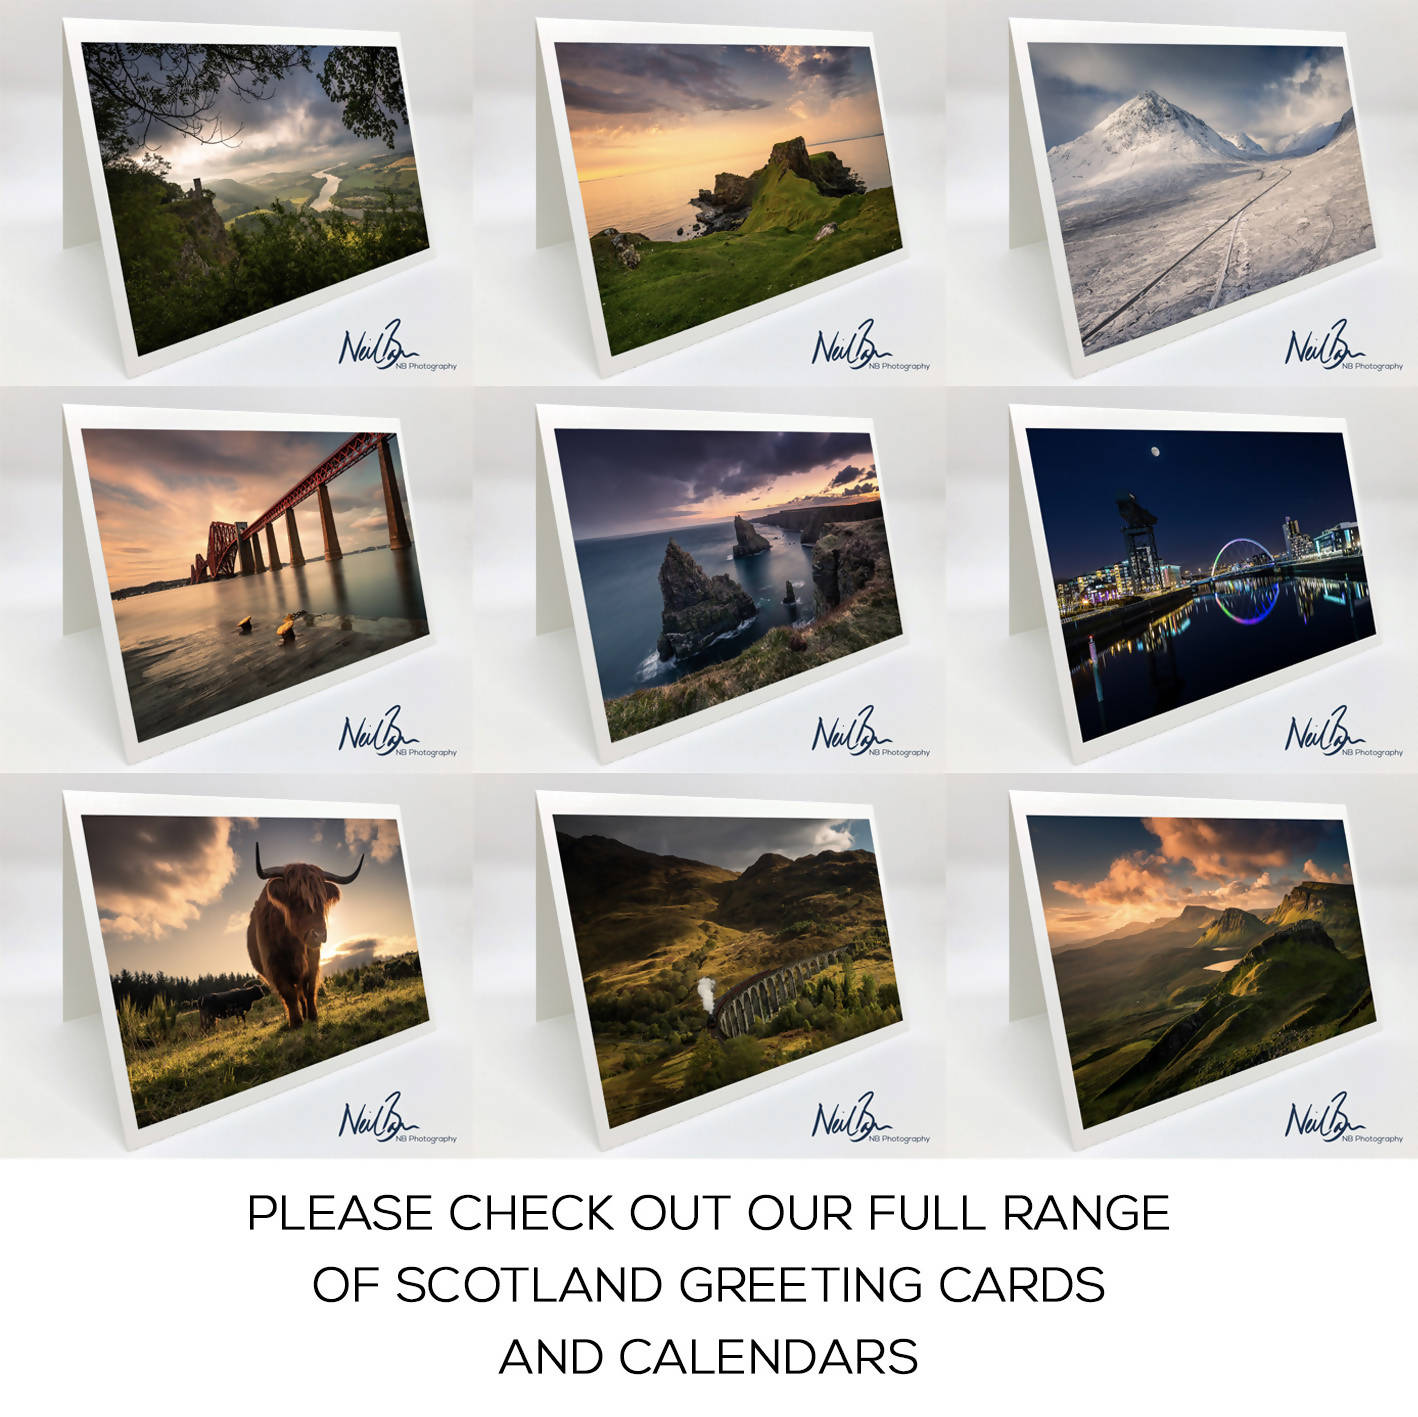 Rannoch Moor nr Glen Coe - Scotland Greeting Card - Blank Inside